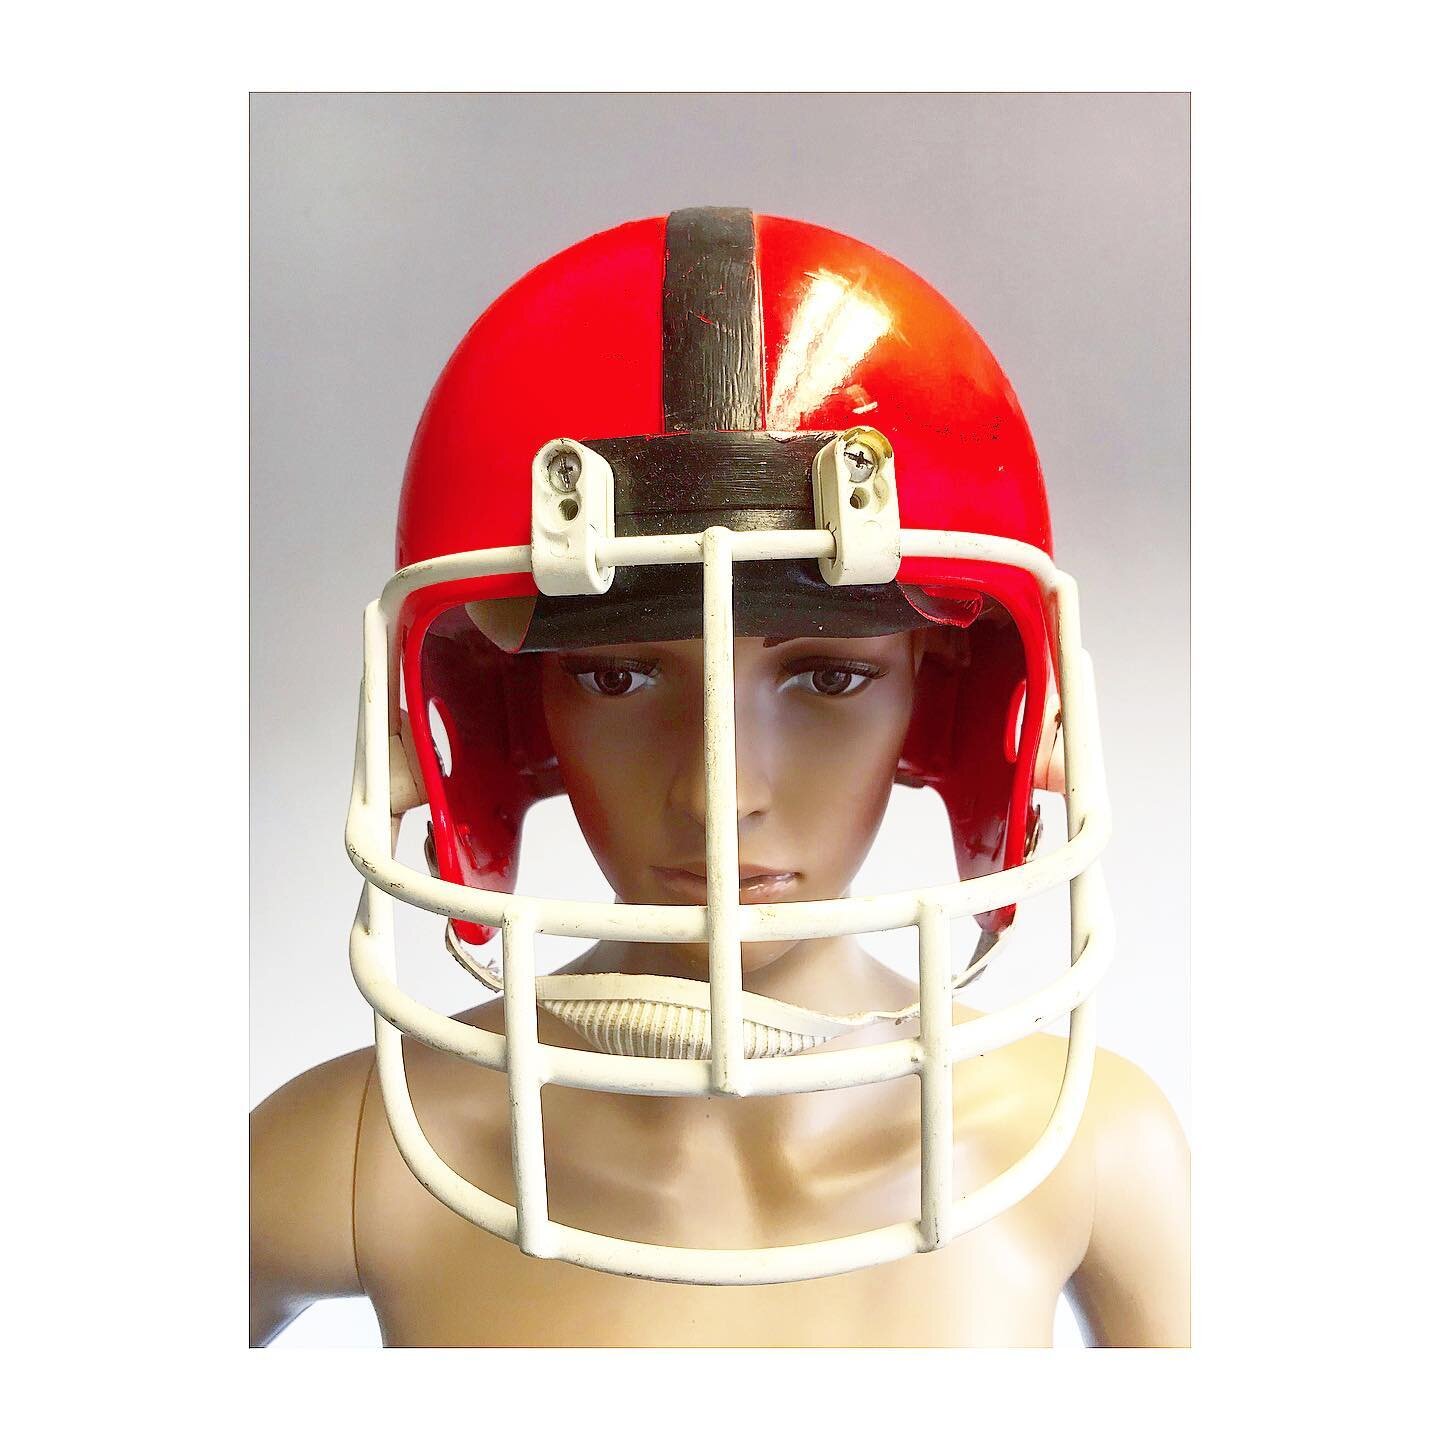 Stay safe kids!! ⛑⛑⛑.
.
.
.
.
.
.
.
.
.
.
.
#helmet #helmets #helmethairdontcare #helmetdesign #red #redhelmet #hat #hardhat #footballhelmet #footballhelmets #americanfootball #americanfootballgrind #costume #costumedesign #costumehouse #costumehire 